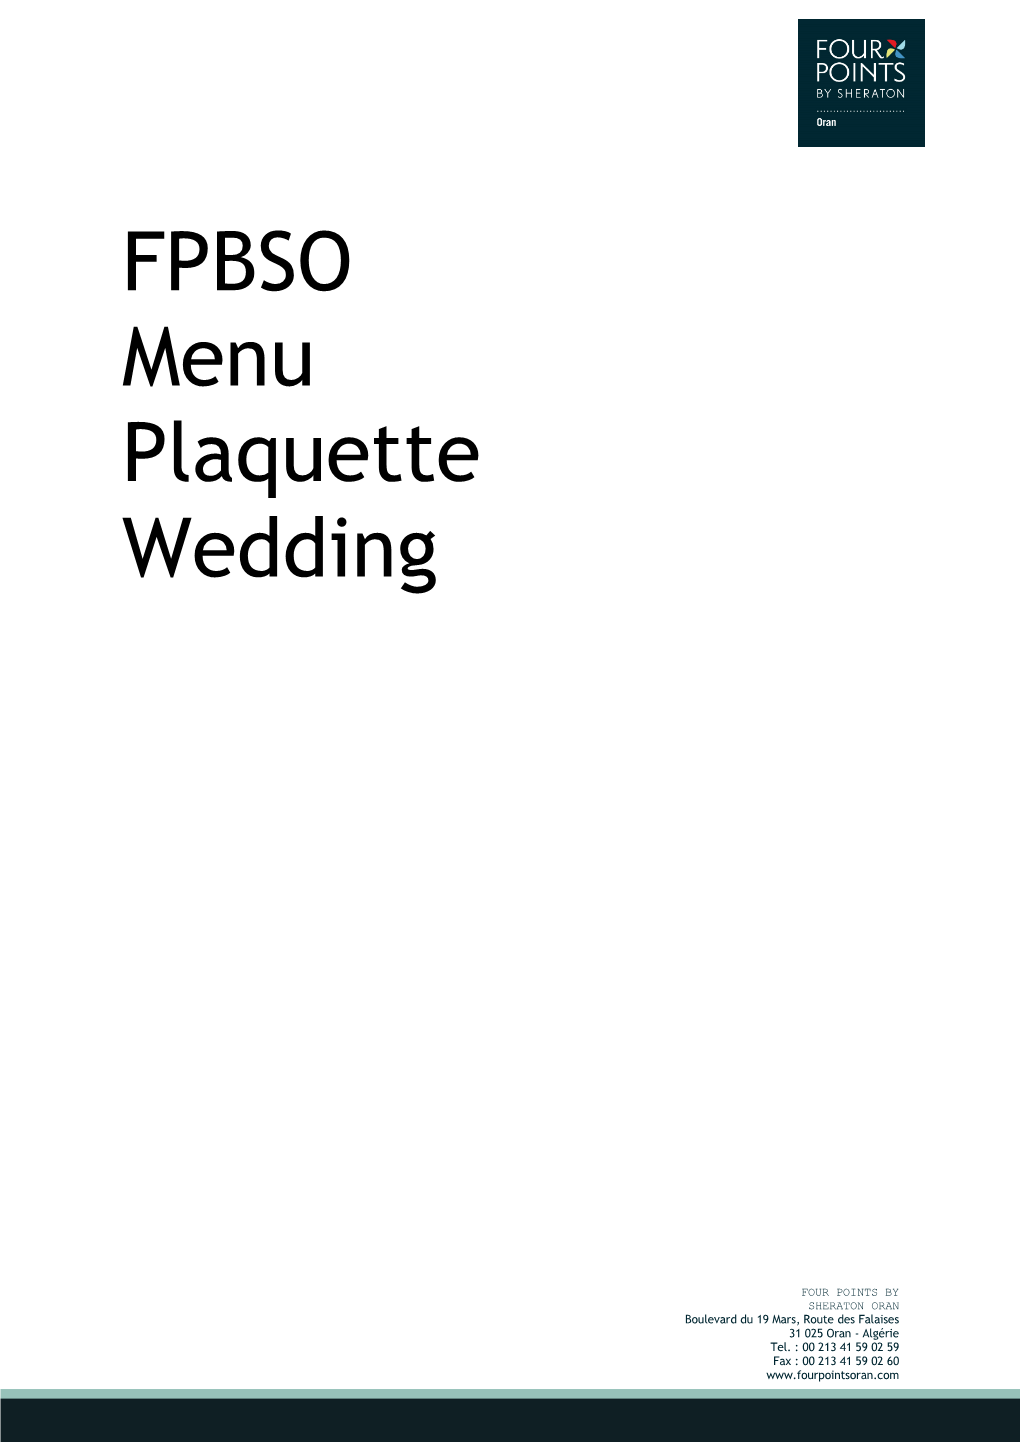 FPBSO Menu Plaquette Wedding